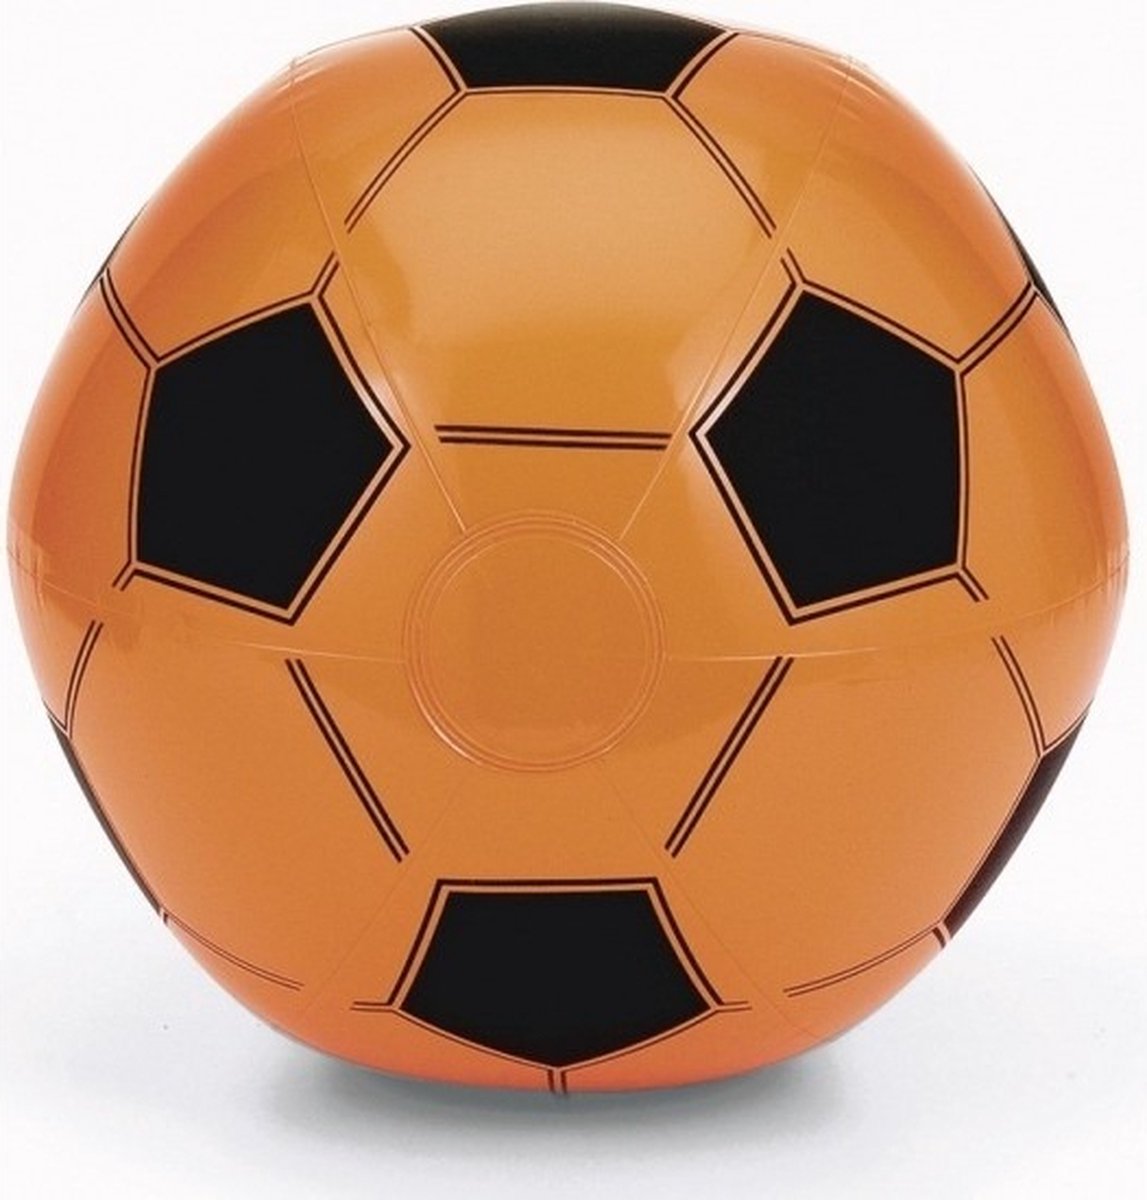 5x Opblaasbare oranje voetbal strandbal speelgoed - Strandballen - Buitenspeelgoed